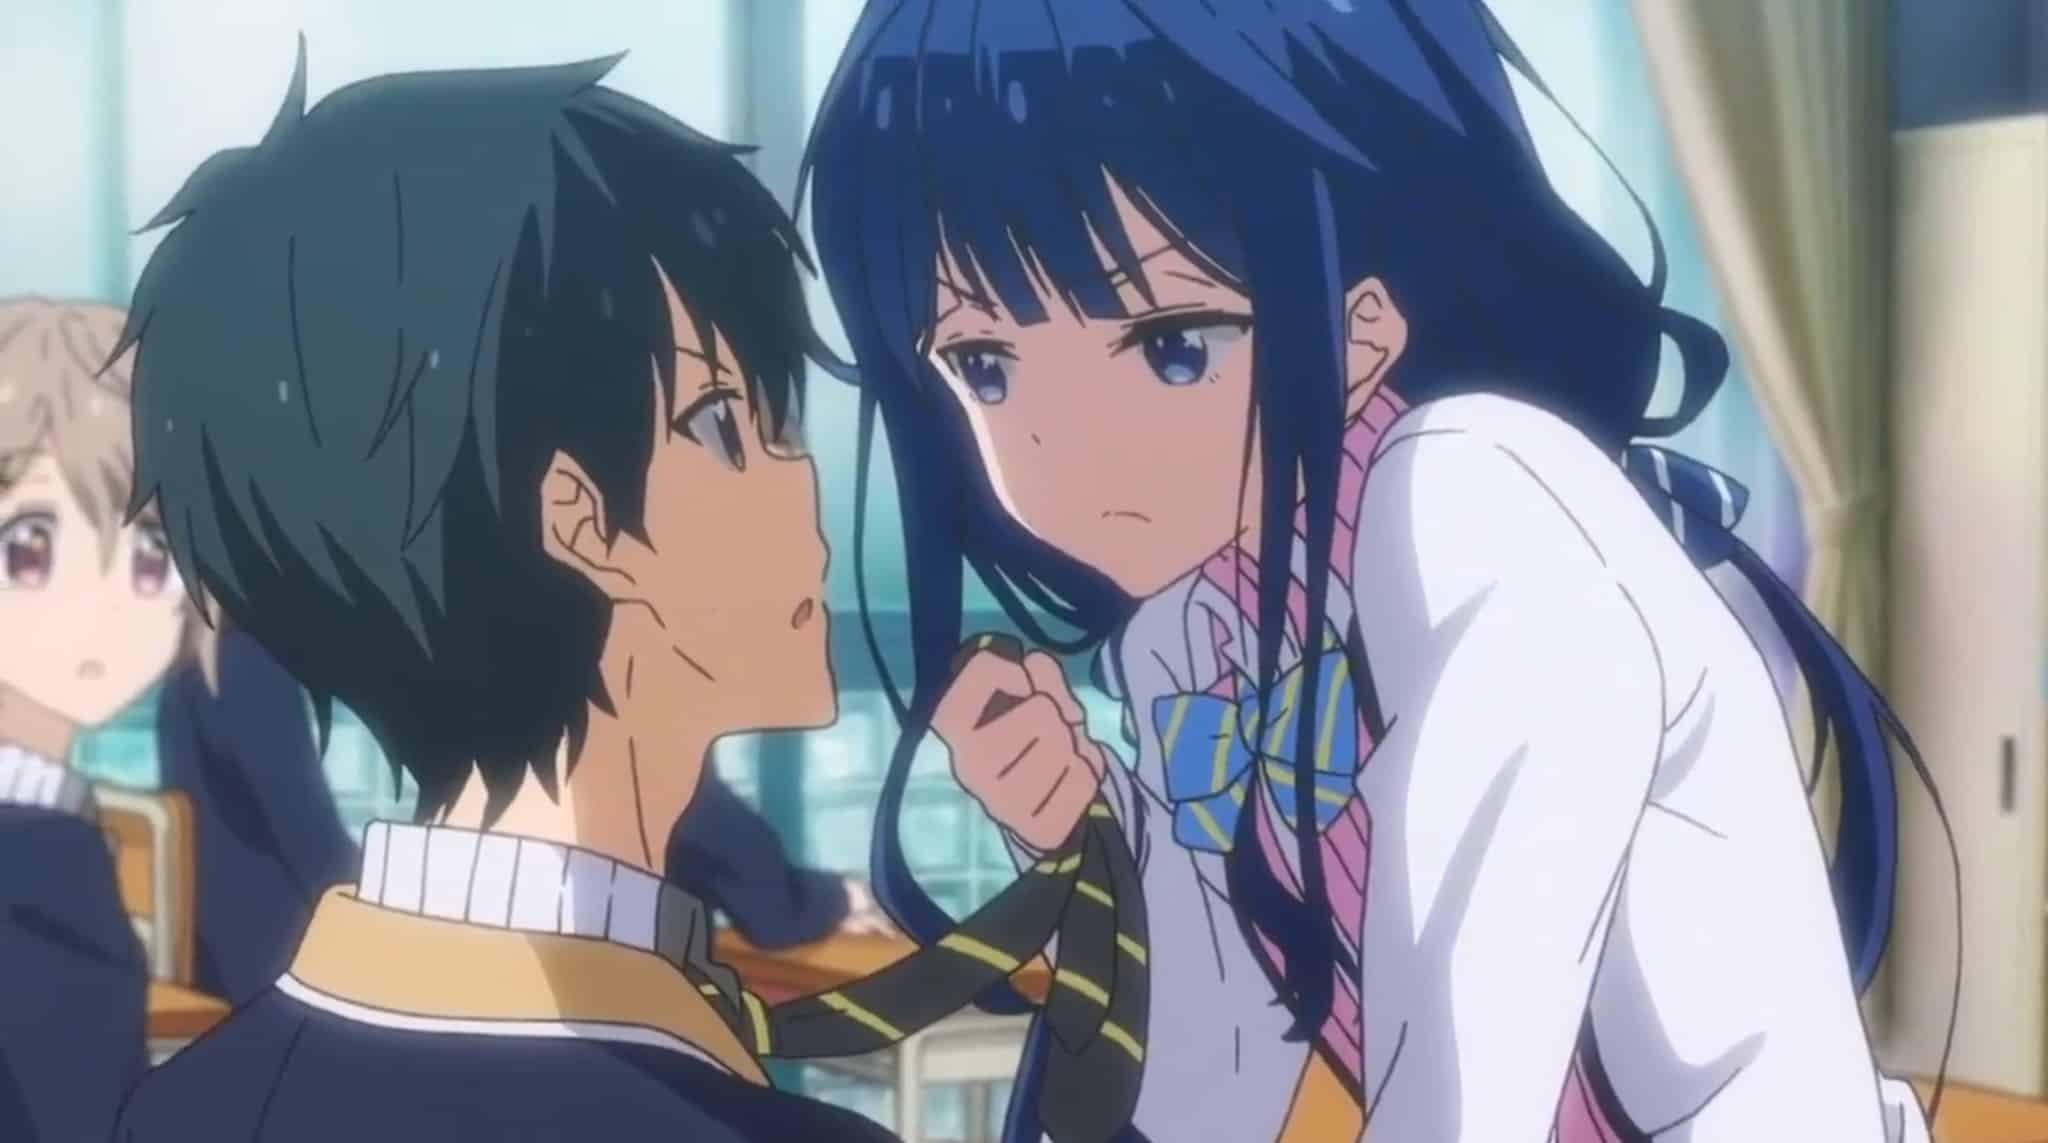 Cute high school girl pulls guy closer by his tie